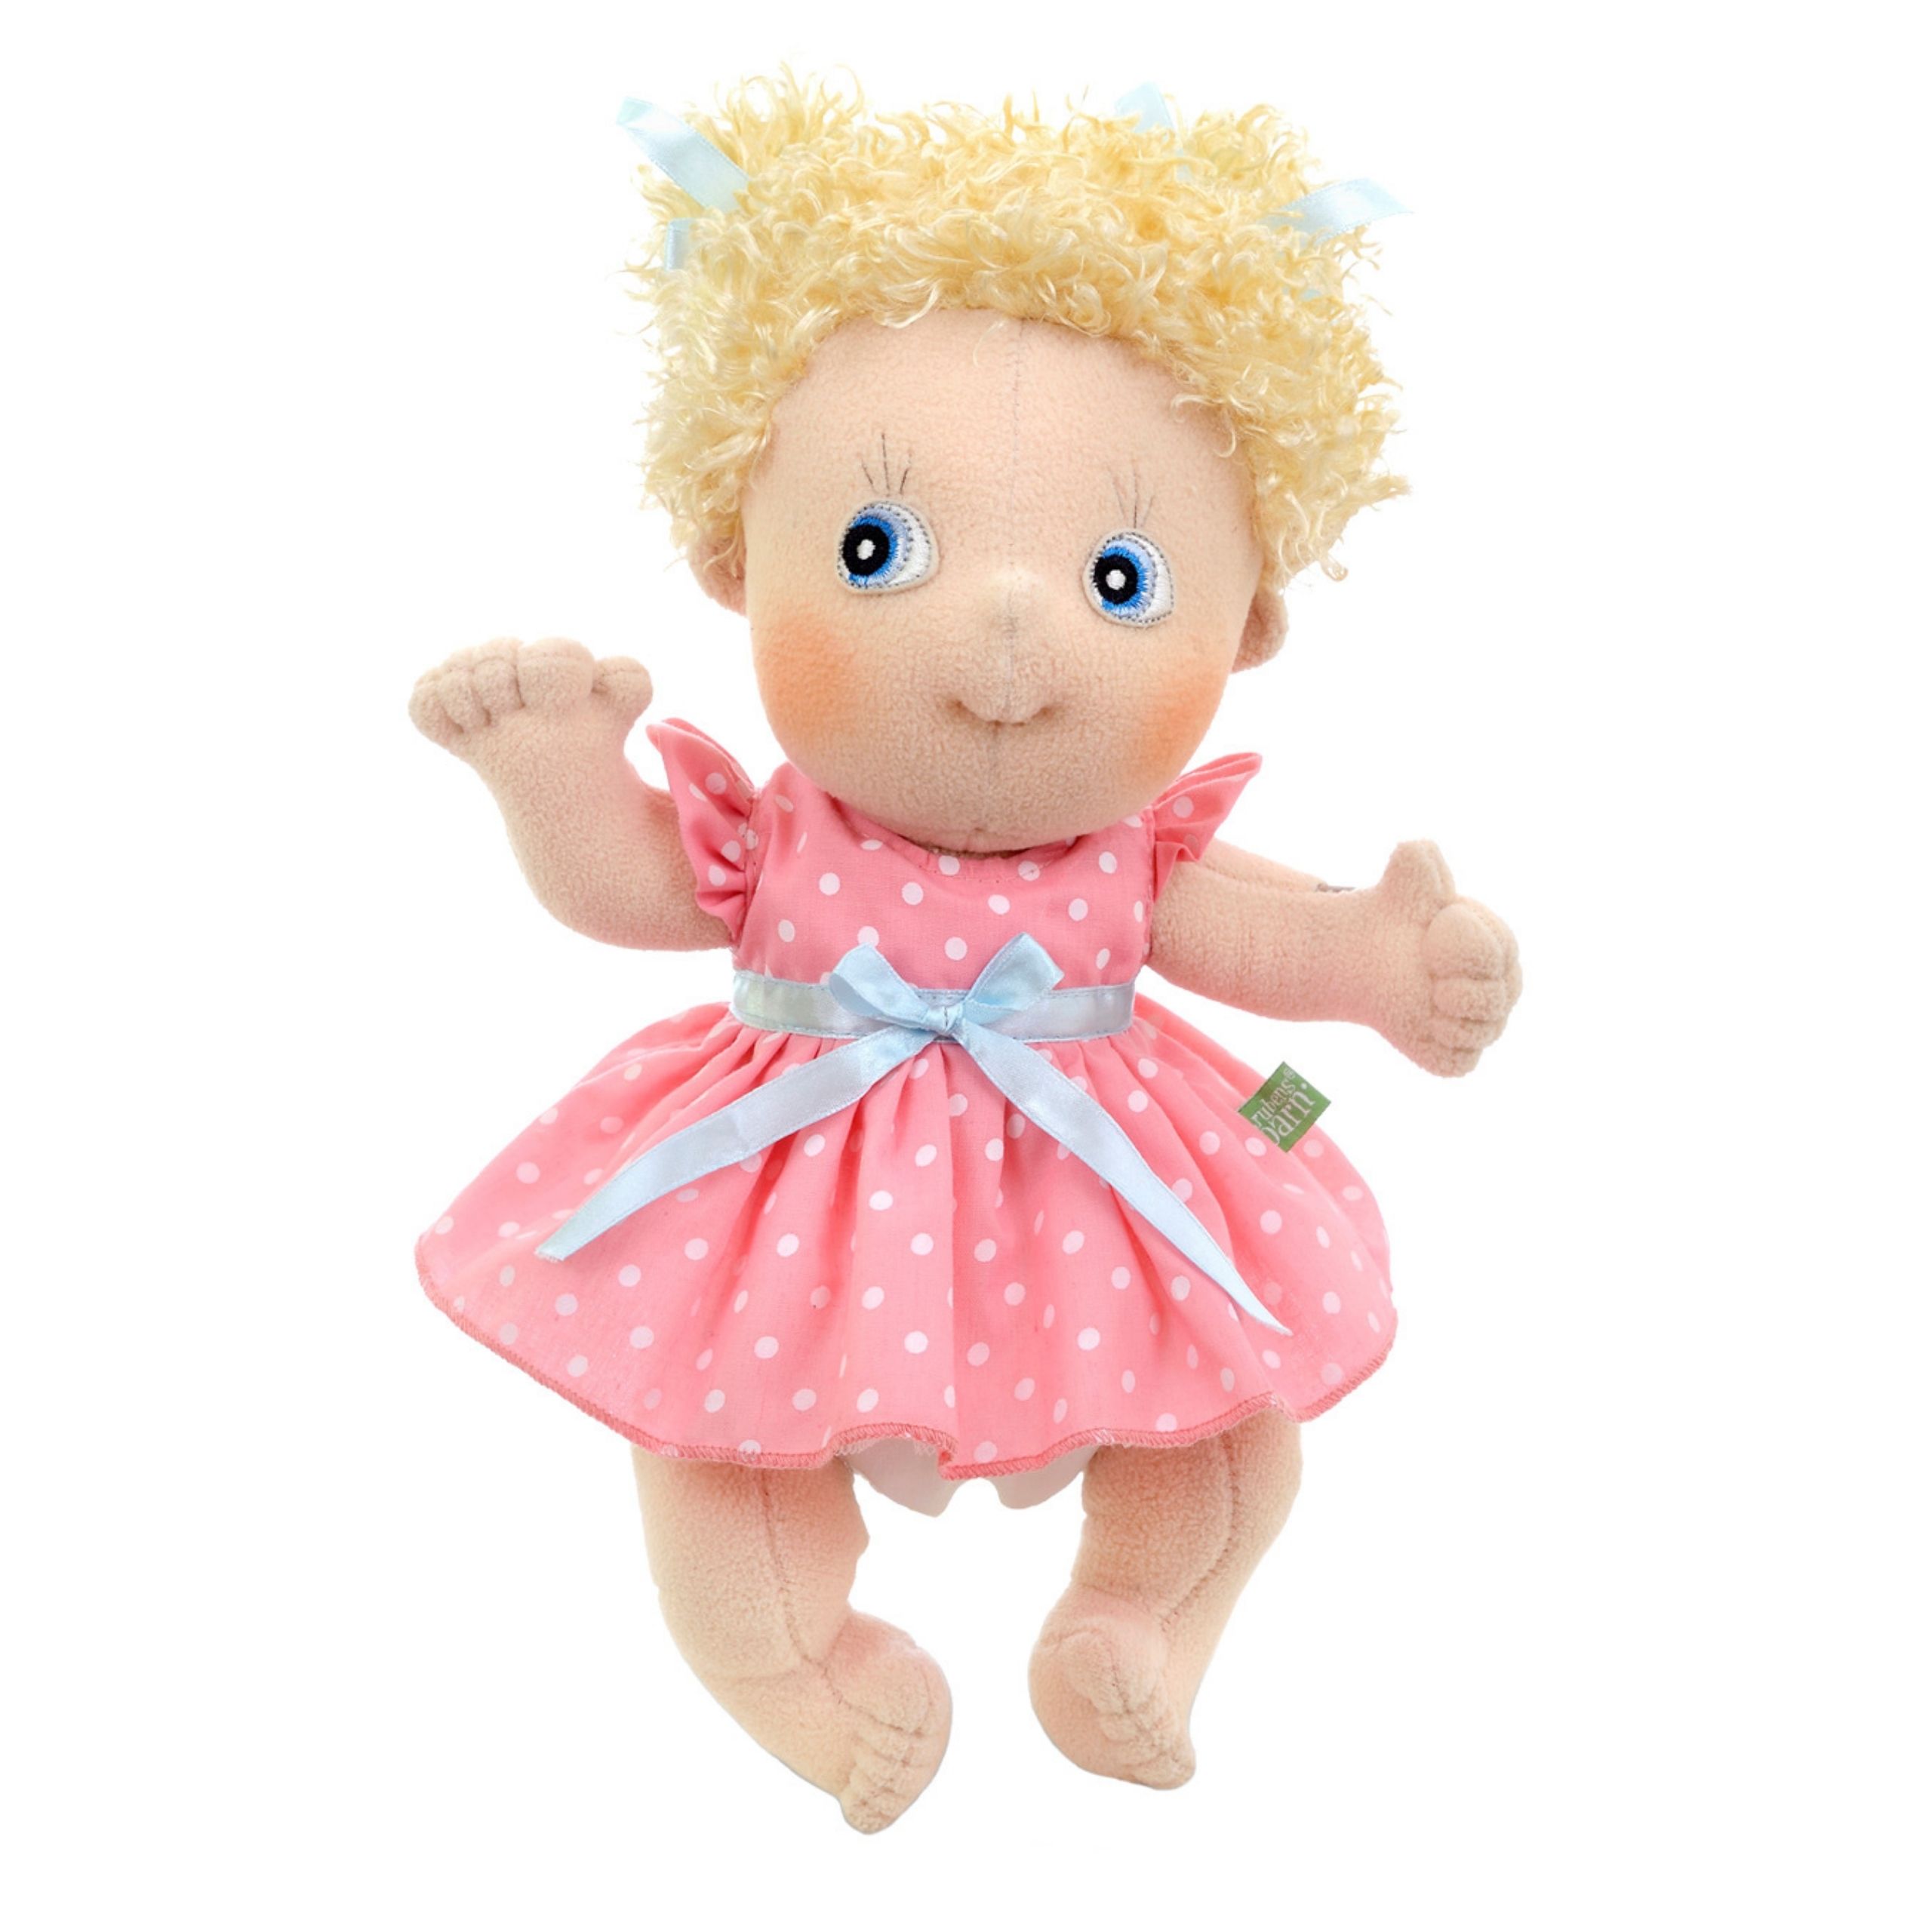 Rubens Barn rubens barn soft doll emelie cutie classic